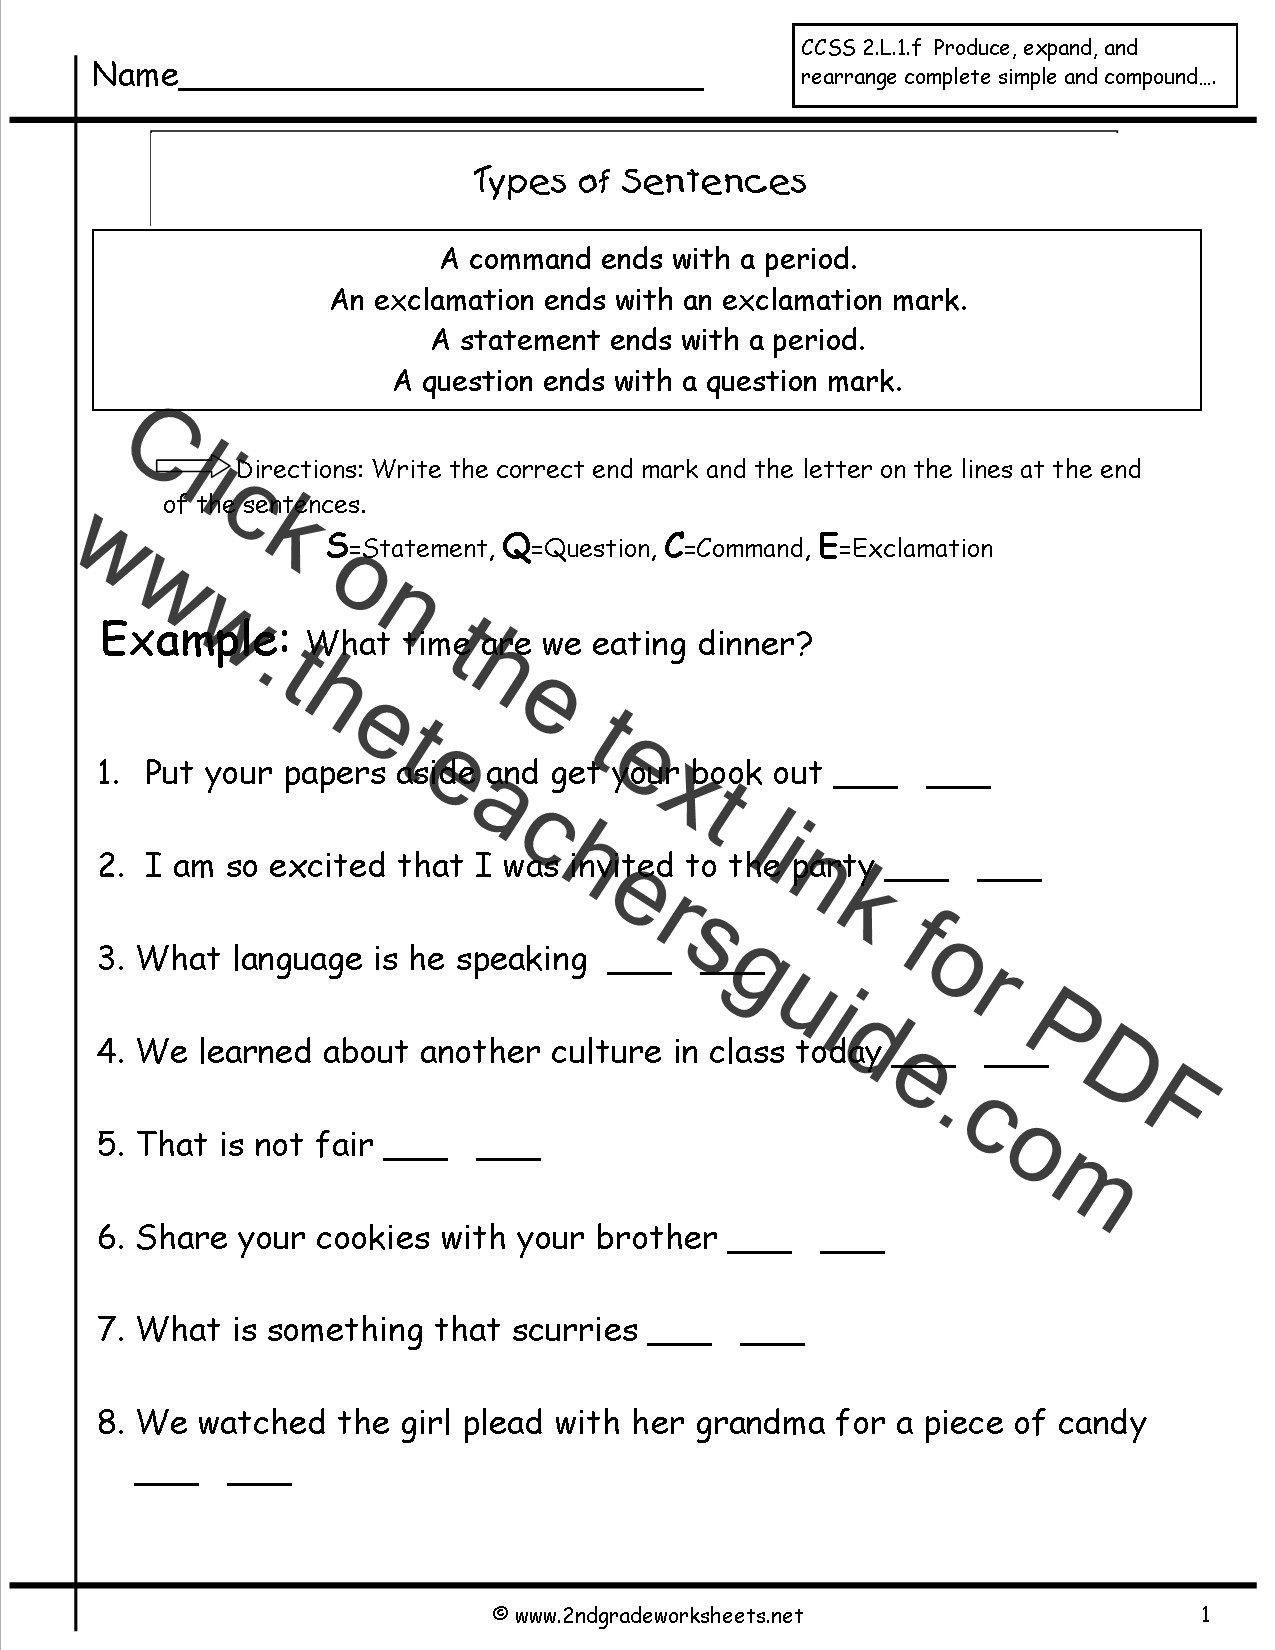 Types Of Sentences Worksheet Second Grade Sentences Worksheets Ccss 2 L 1 F Worksheets